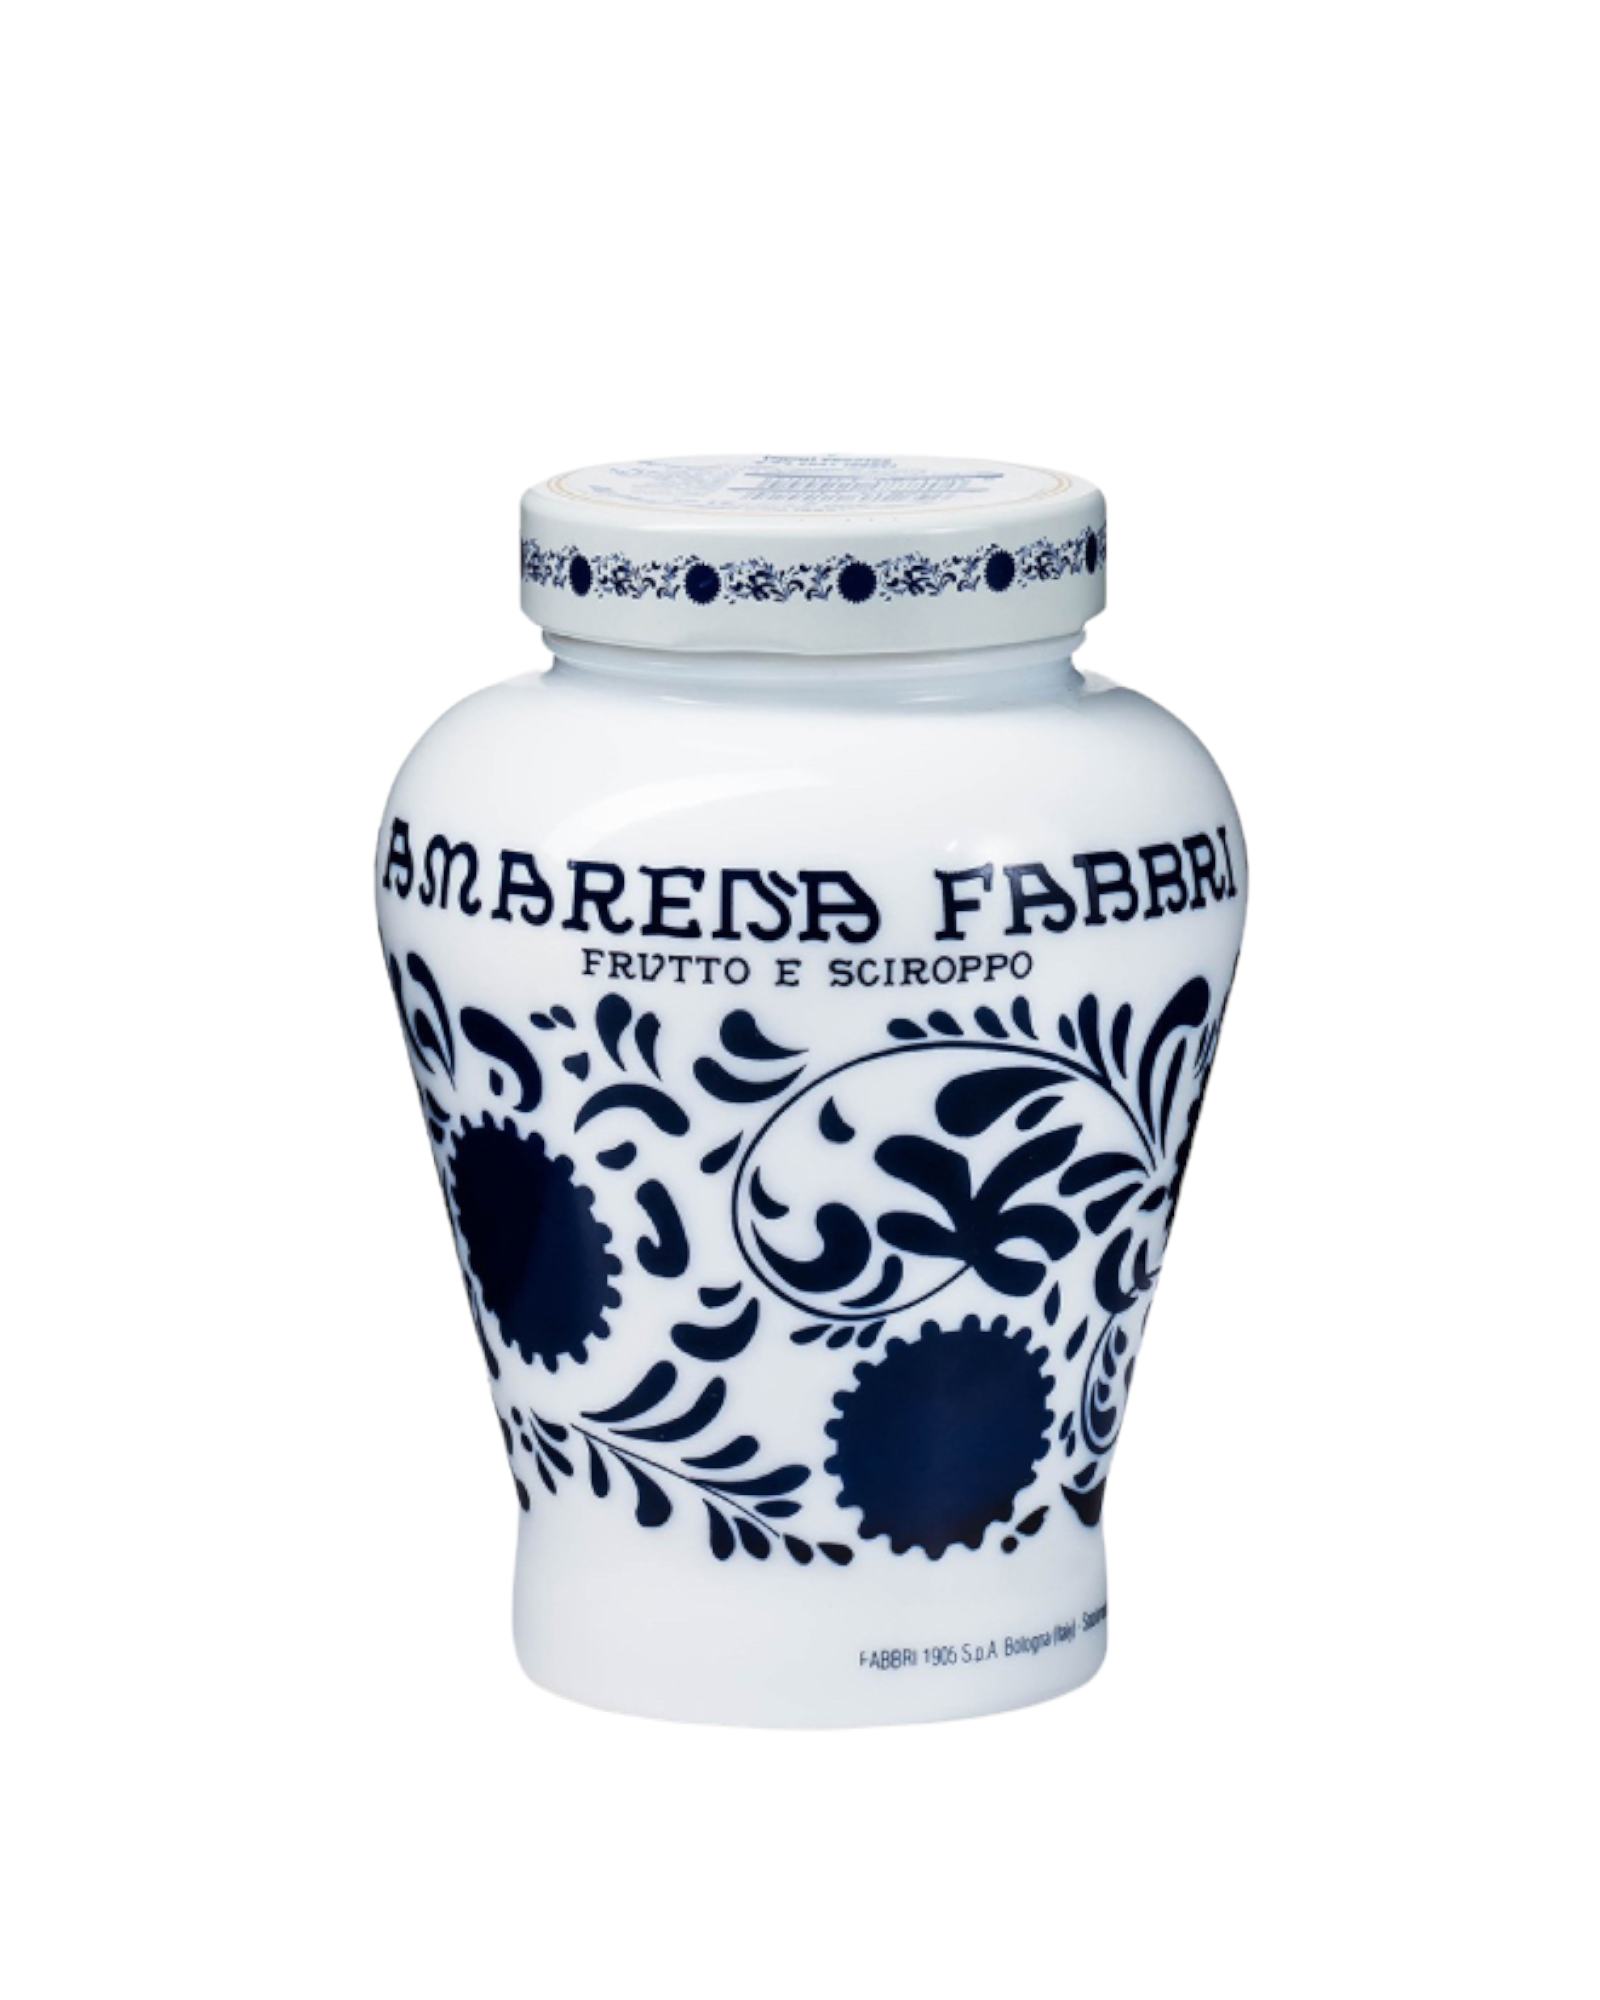 Fabbri - Amarena cherries opaline jar (600g)